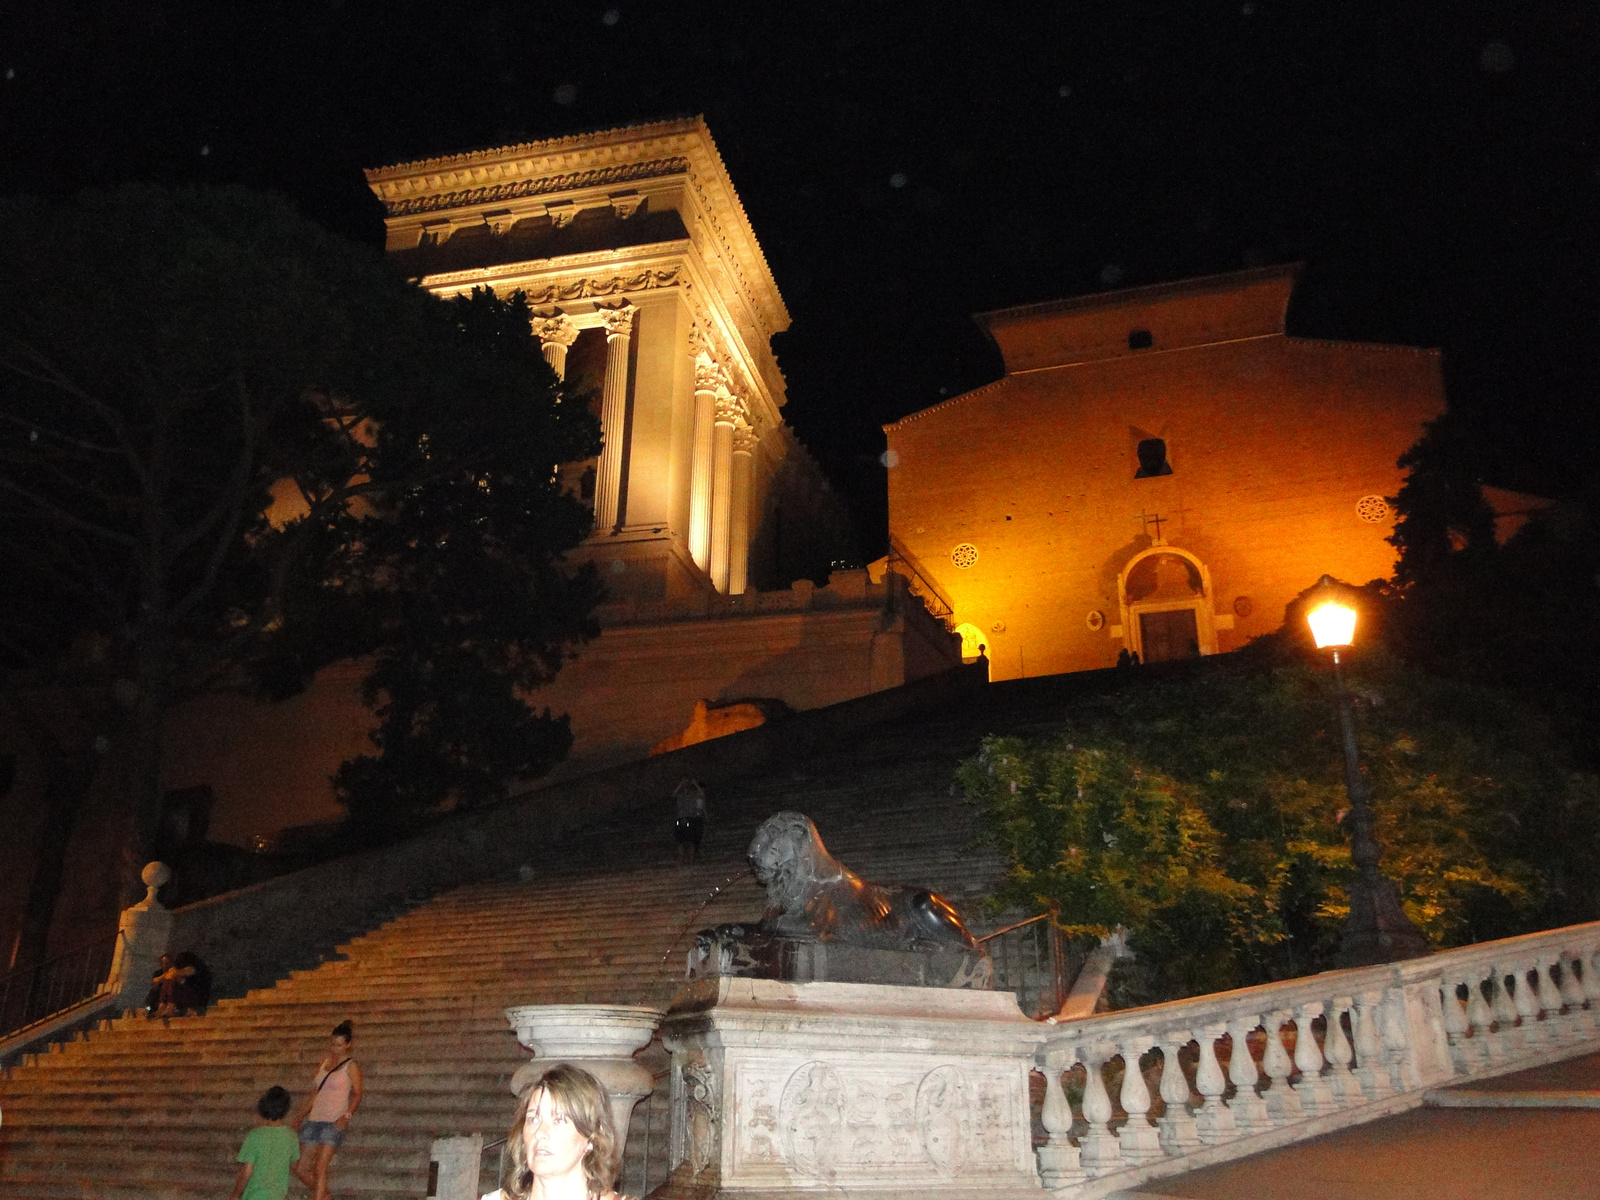 Róma by night, II. Emanuel Monument